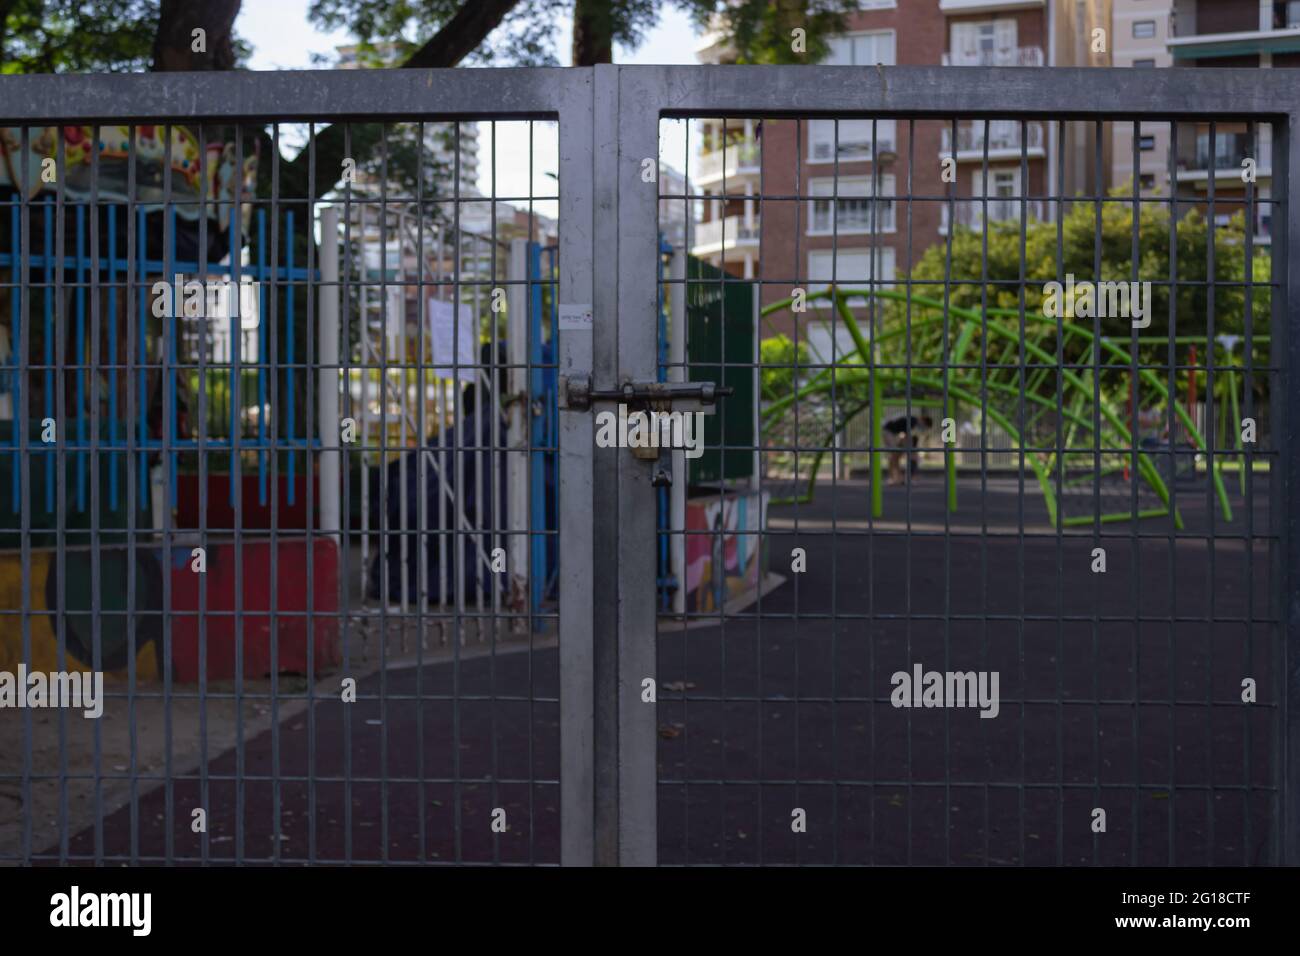 Playground closed with a padlock. Stock Photo